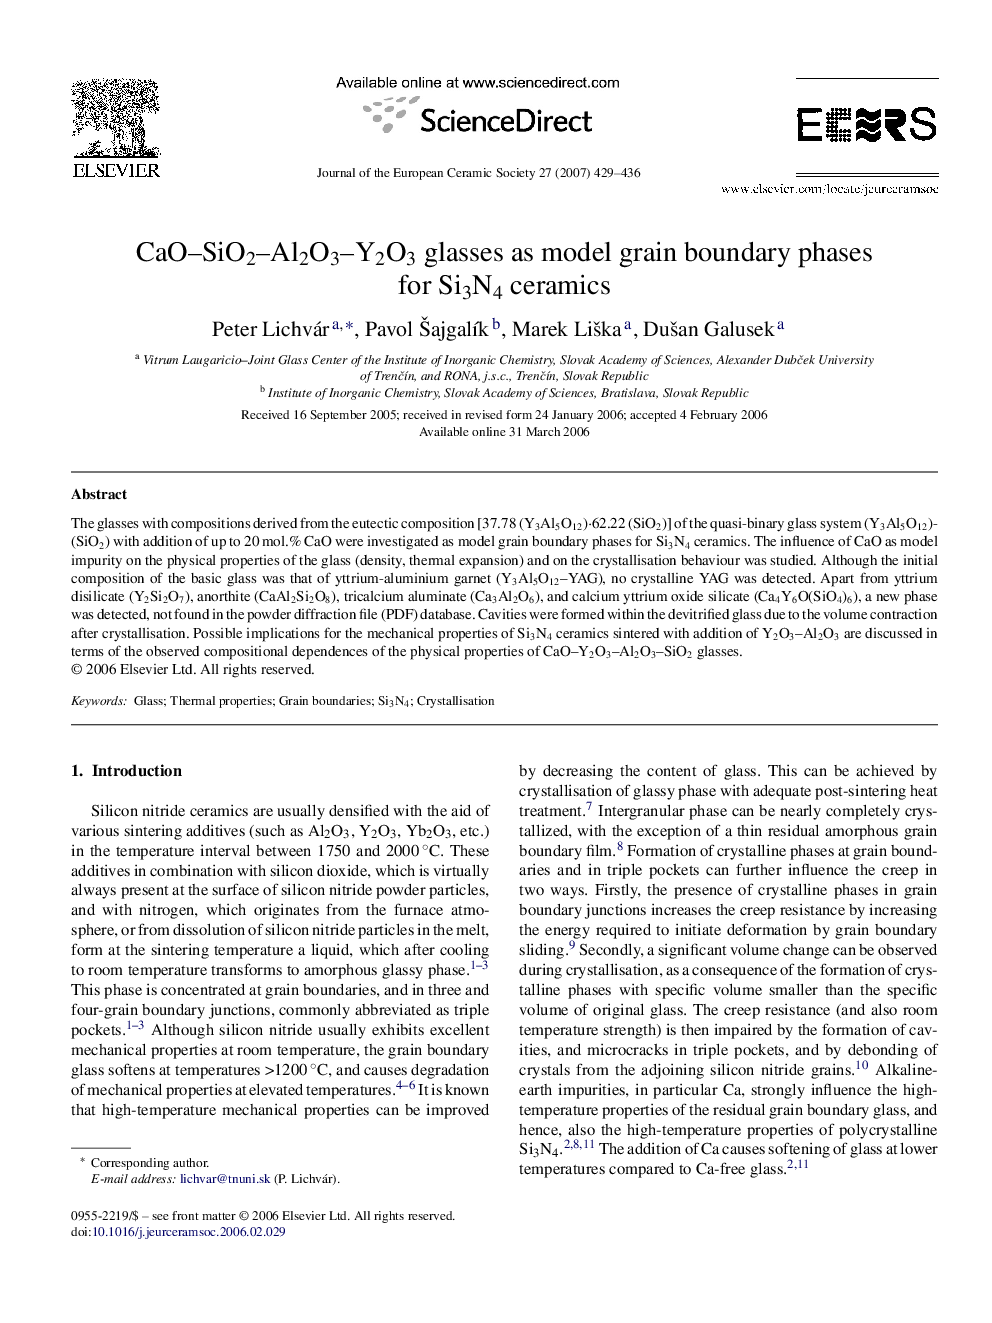 CaO–SiO2–Al2O3–Y2O3 glasses as model grain boundary phases for Si3N4 ceramics